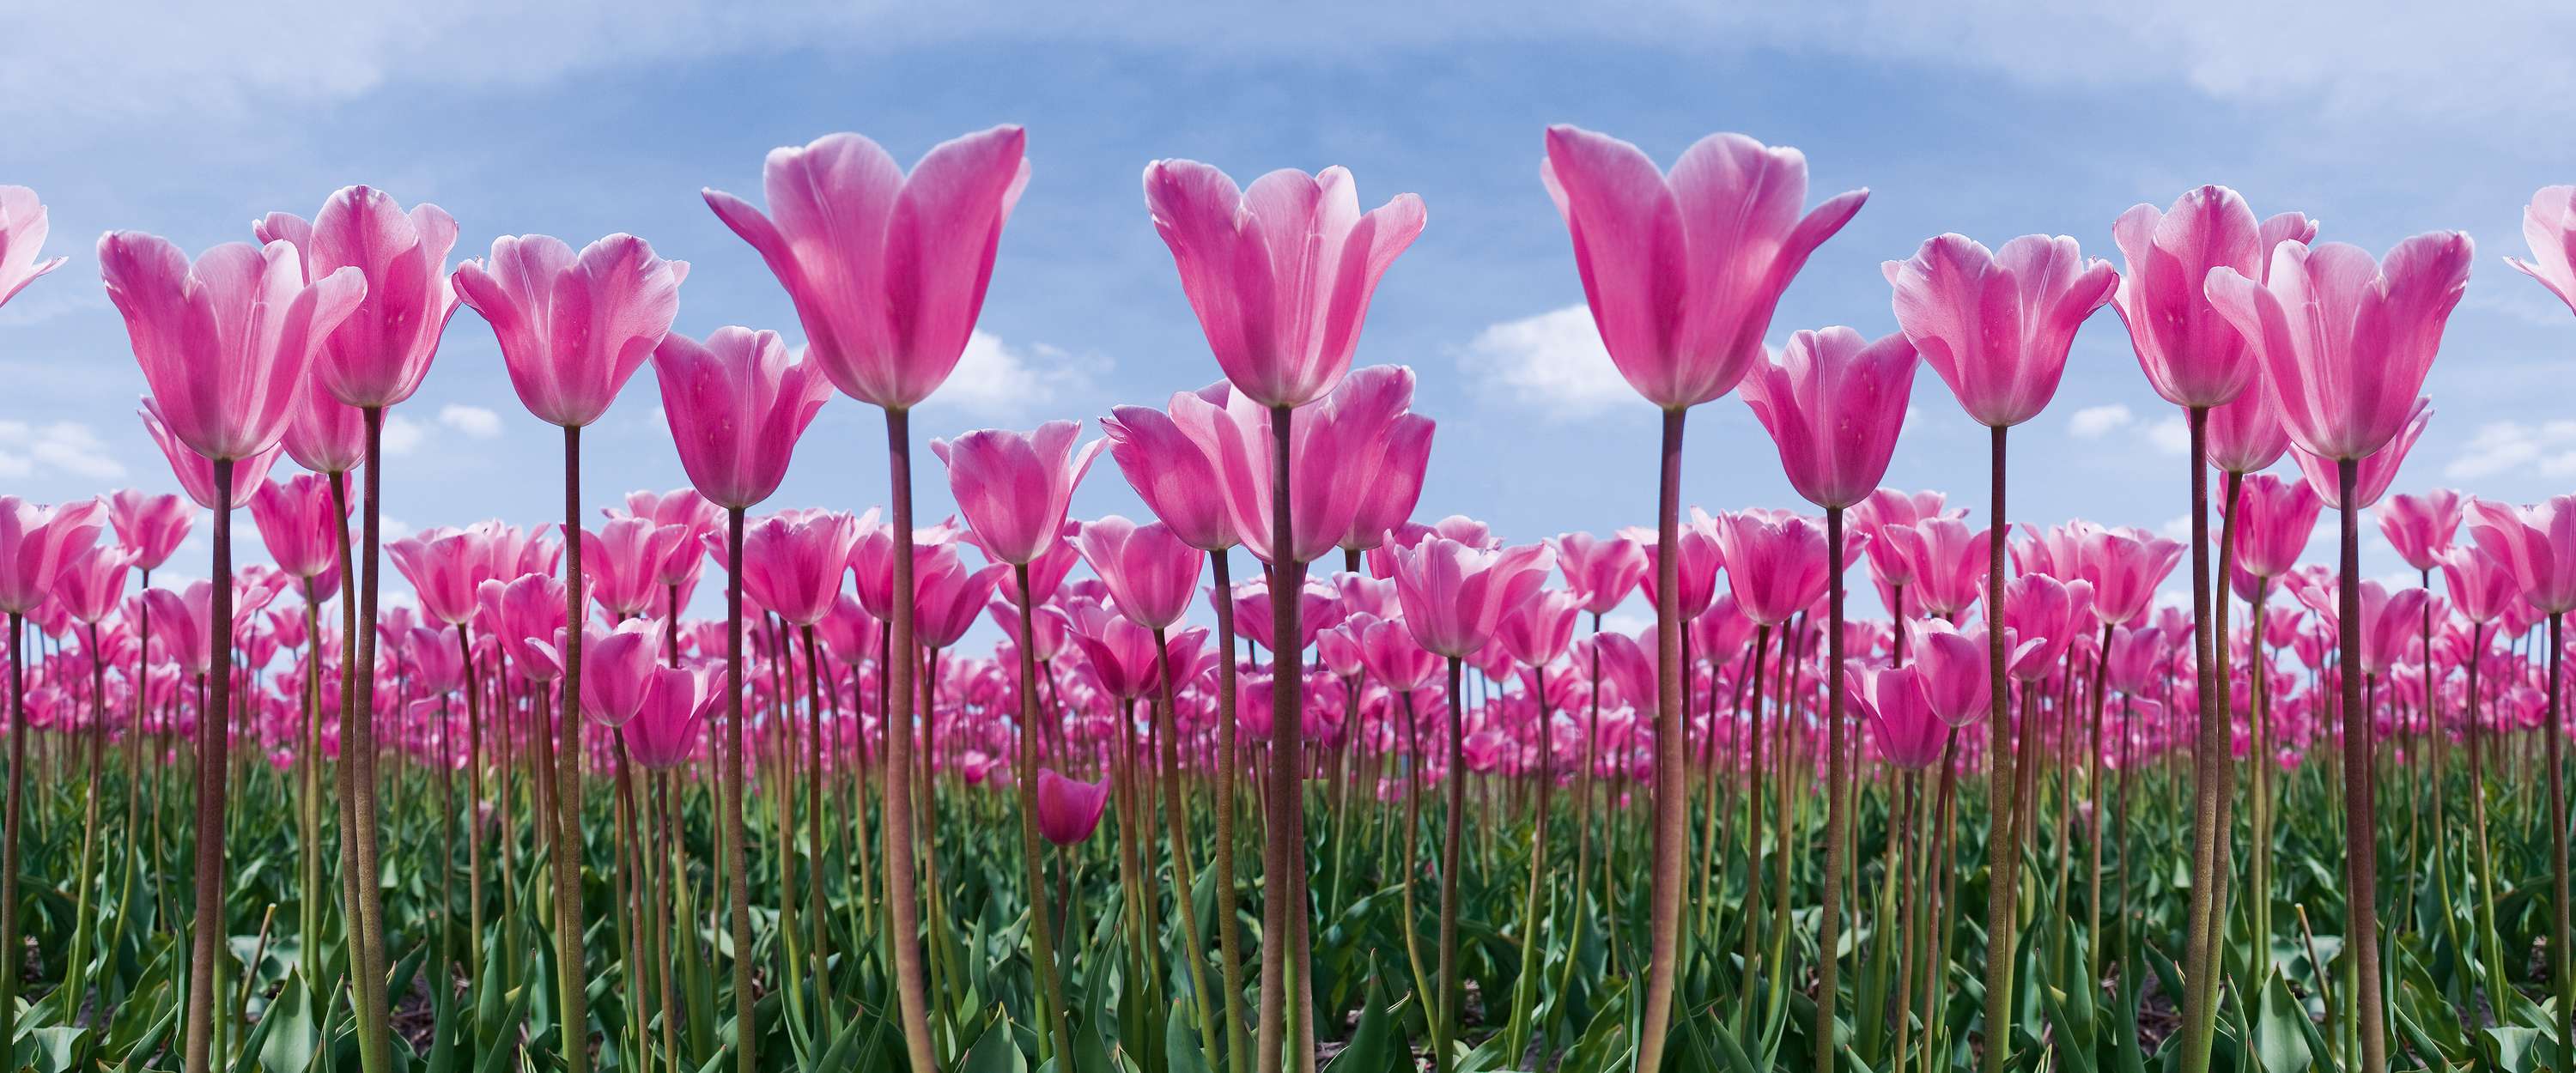             Campo de tulipanes - Papel pintado Flores con tulipanes rosas
        